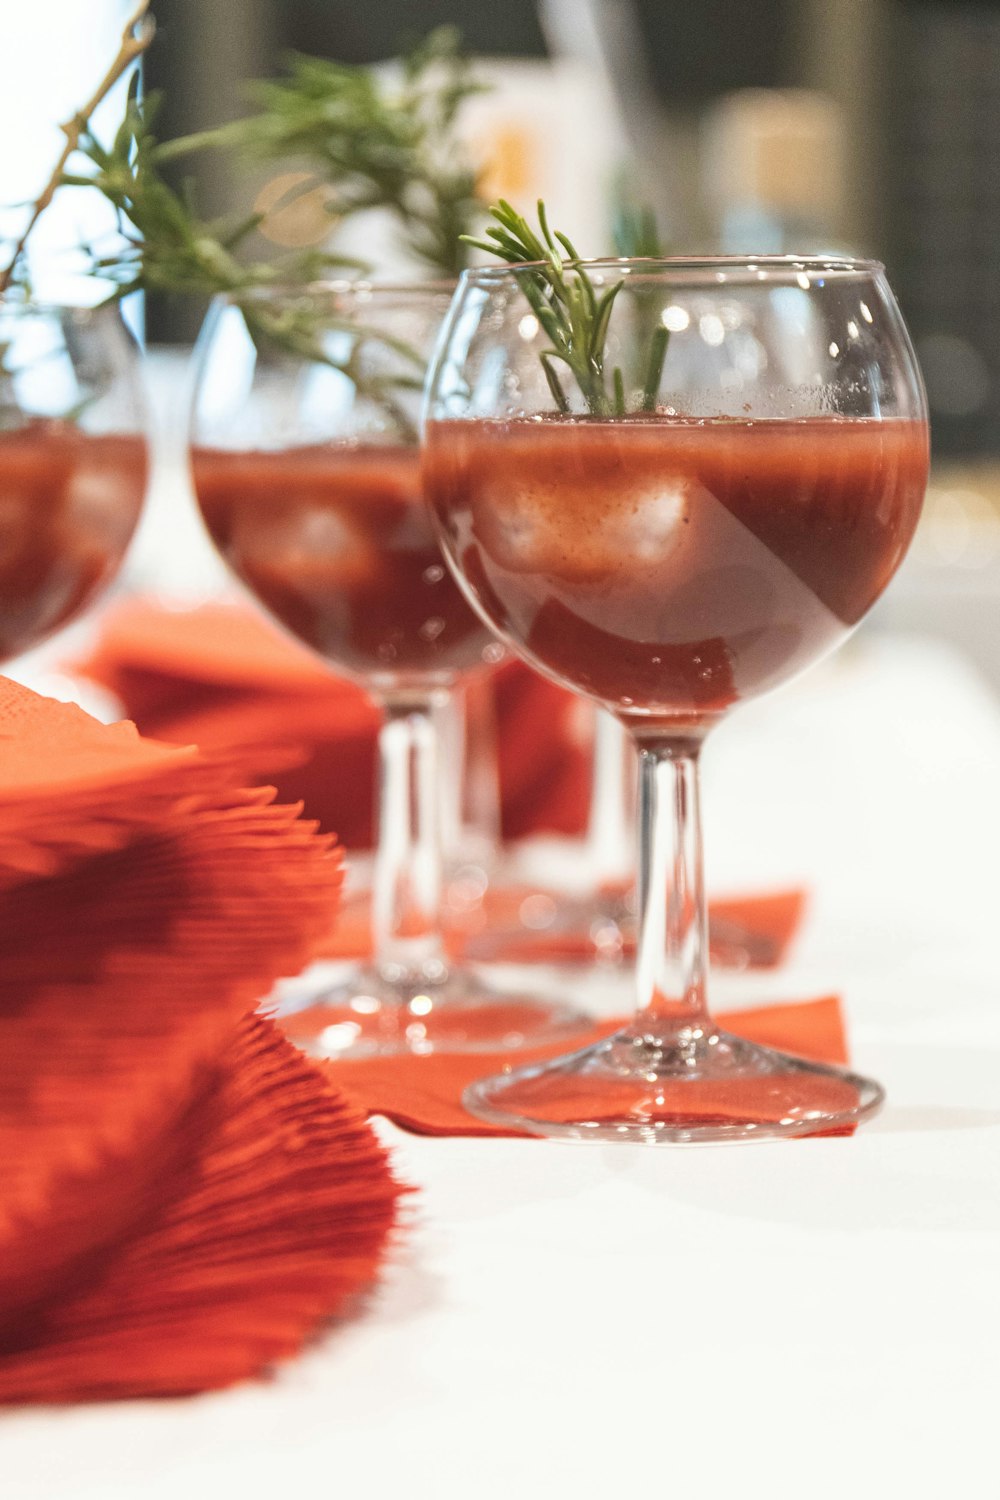 red liquor in wine glass